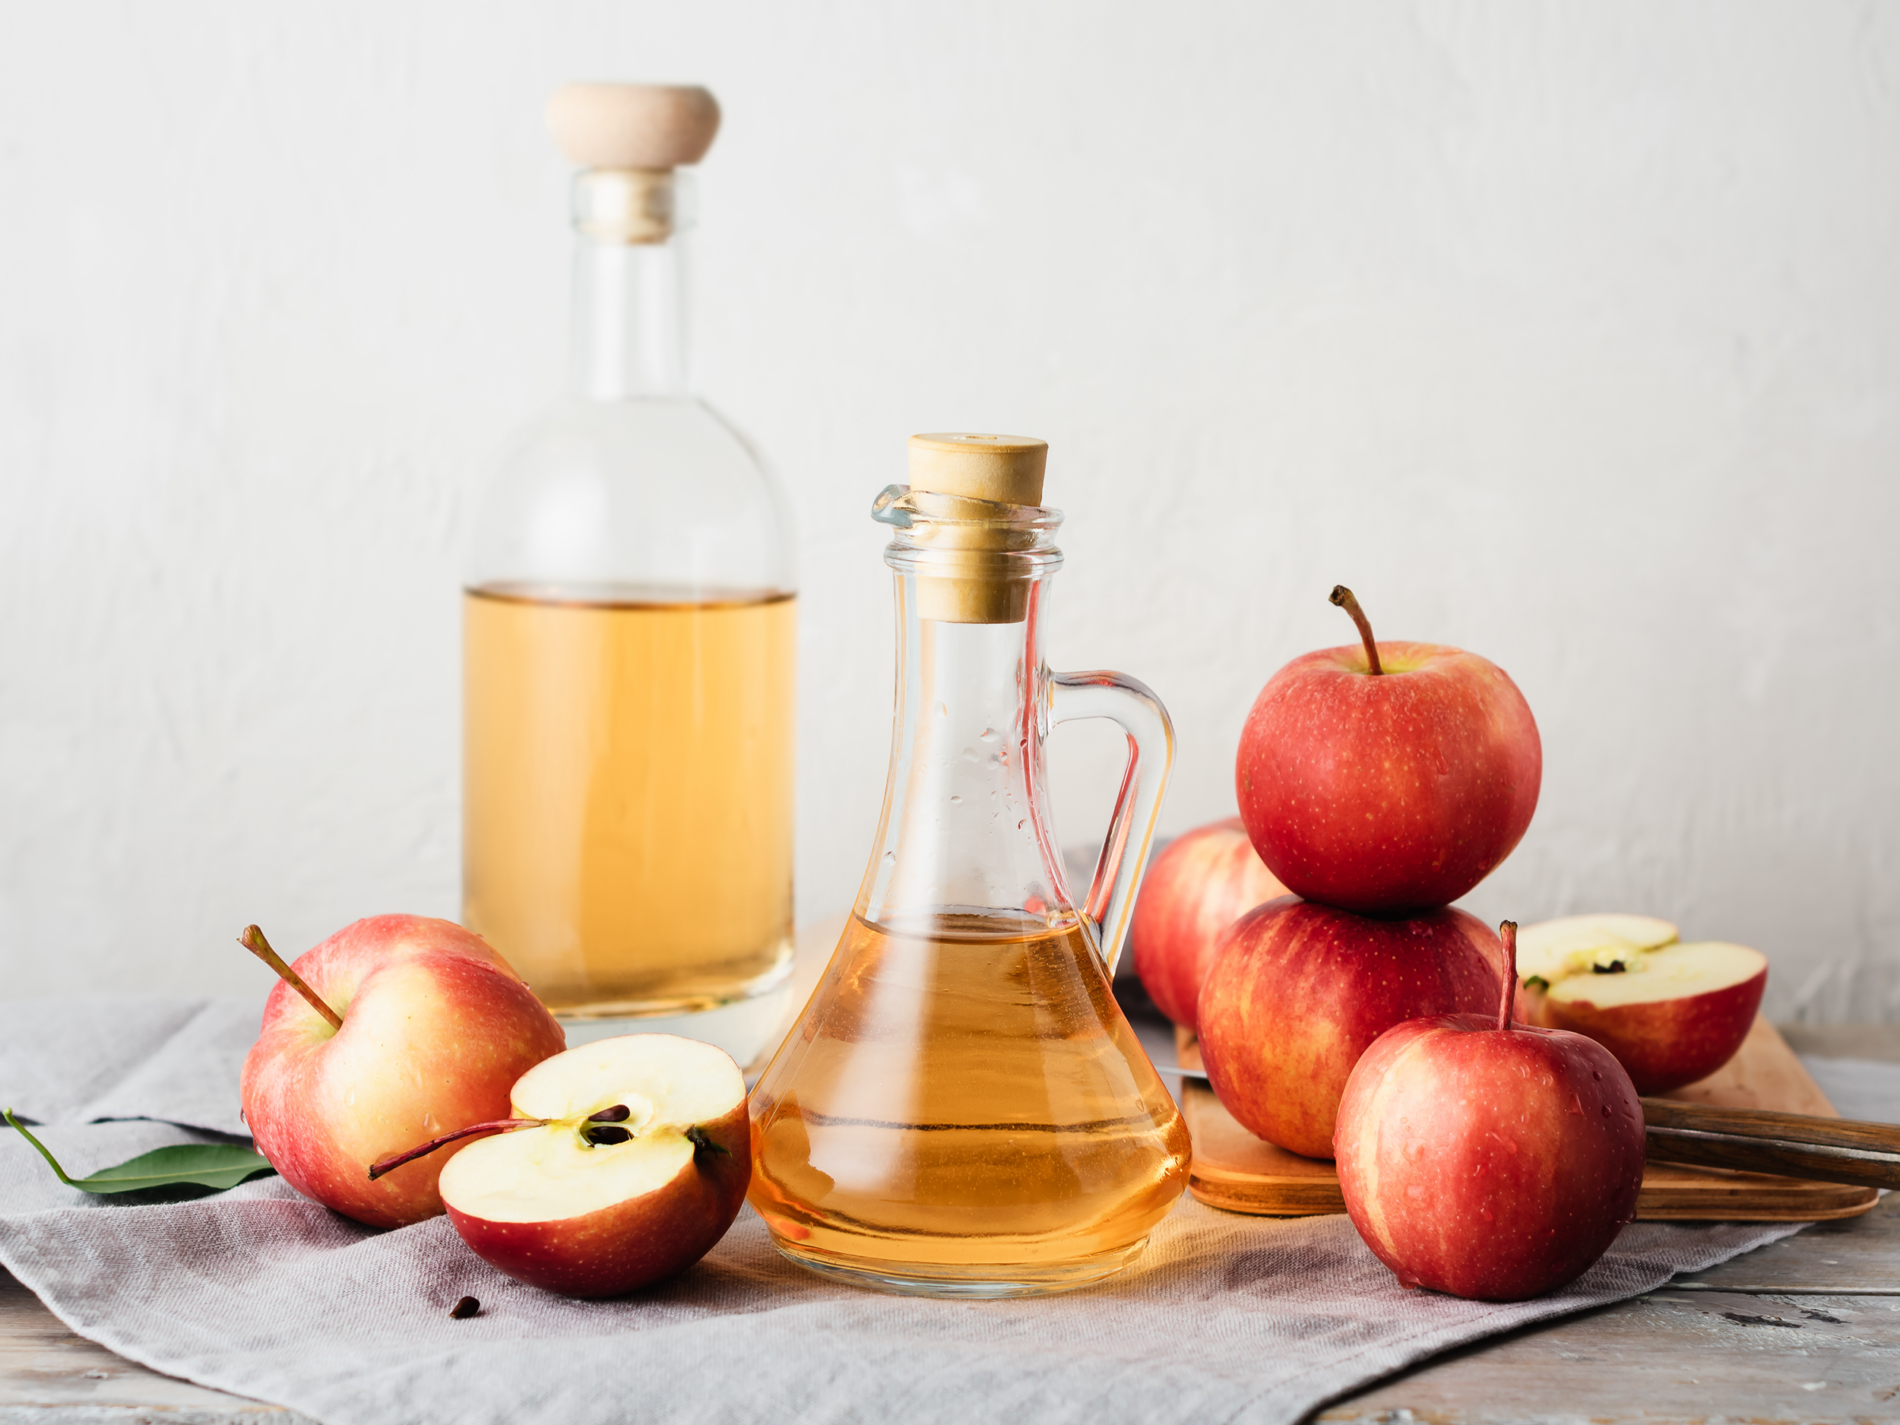 Apple cider vinegar next to fresh apples